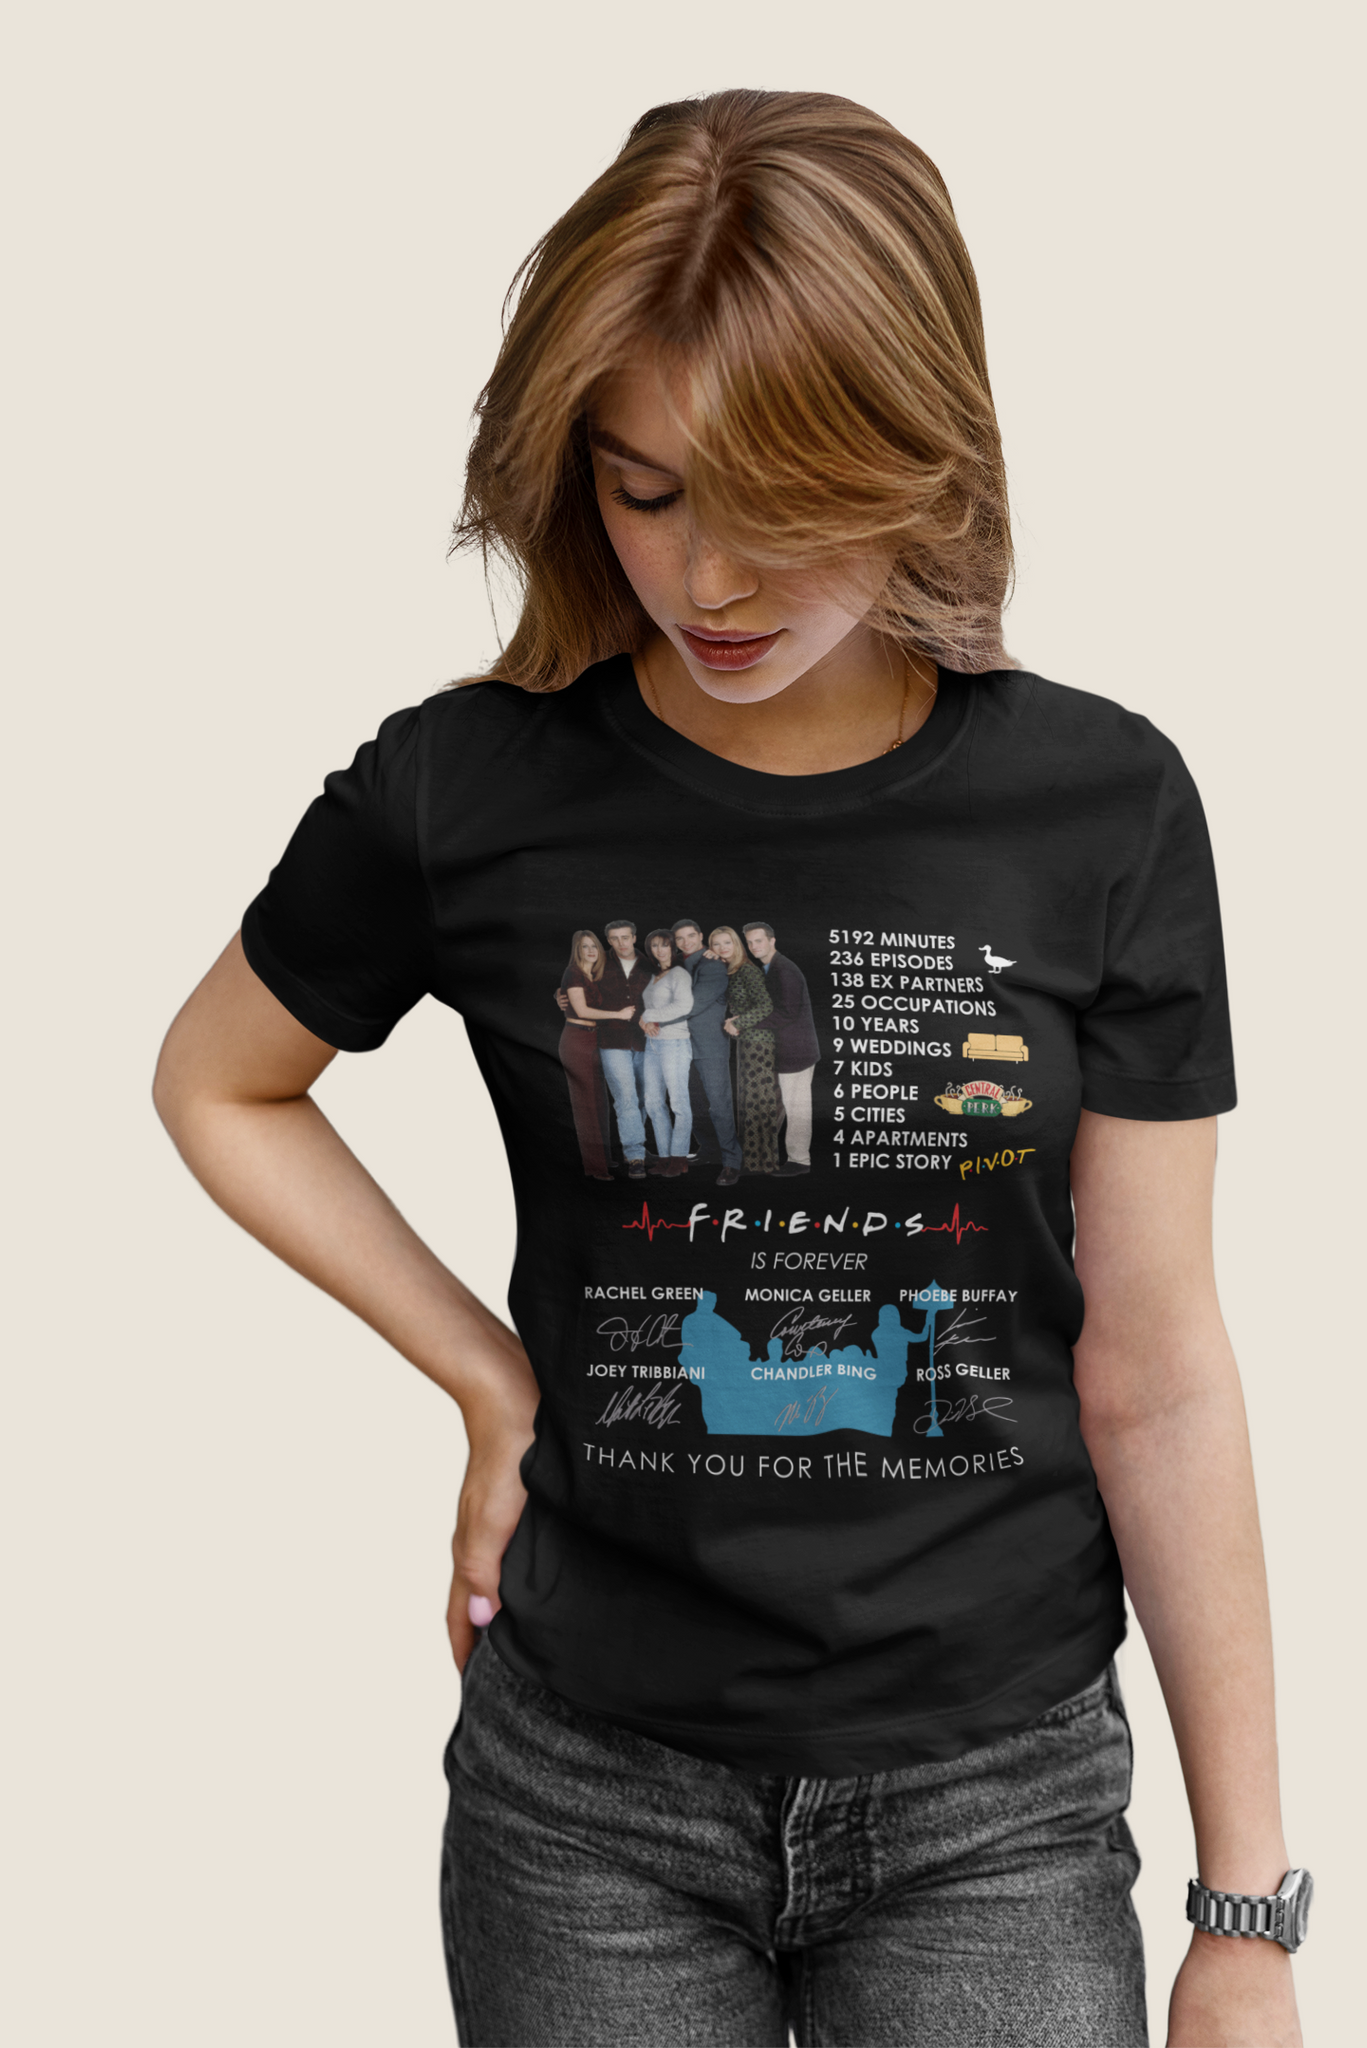 Friends TV Show T Shirt, Friends Shirt, Friends Characters T Shirt, Anniversary Friends Is Forever Tshirt